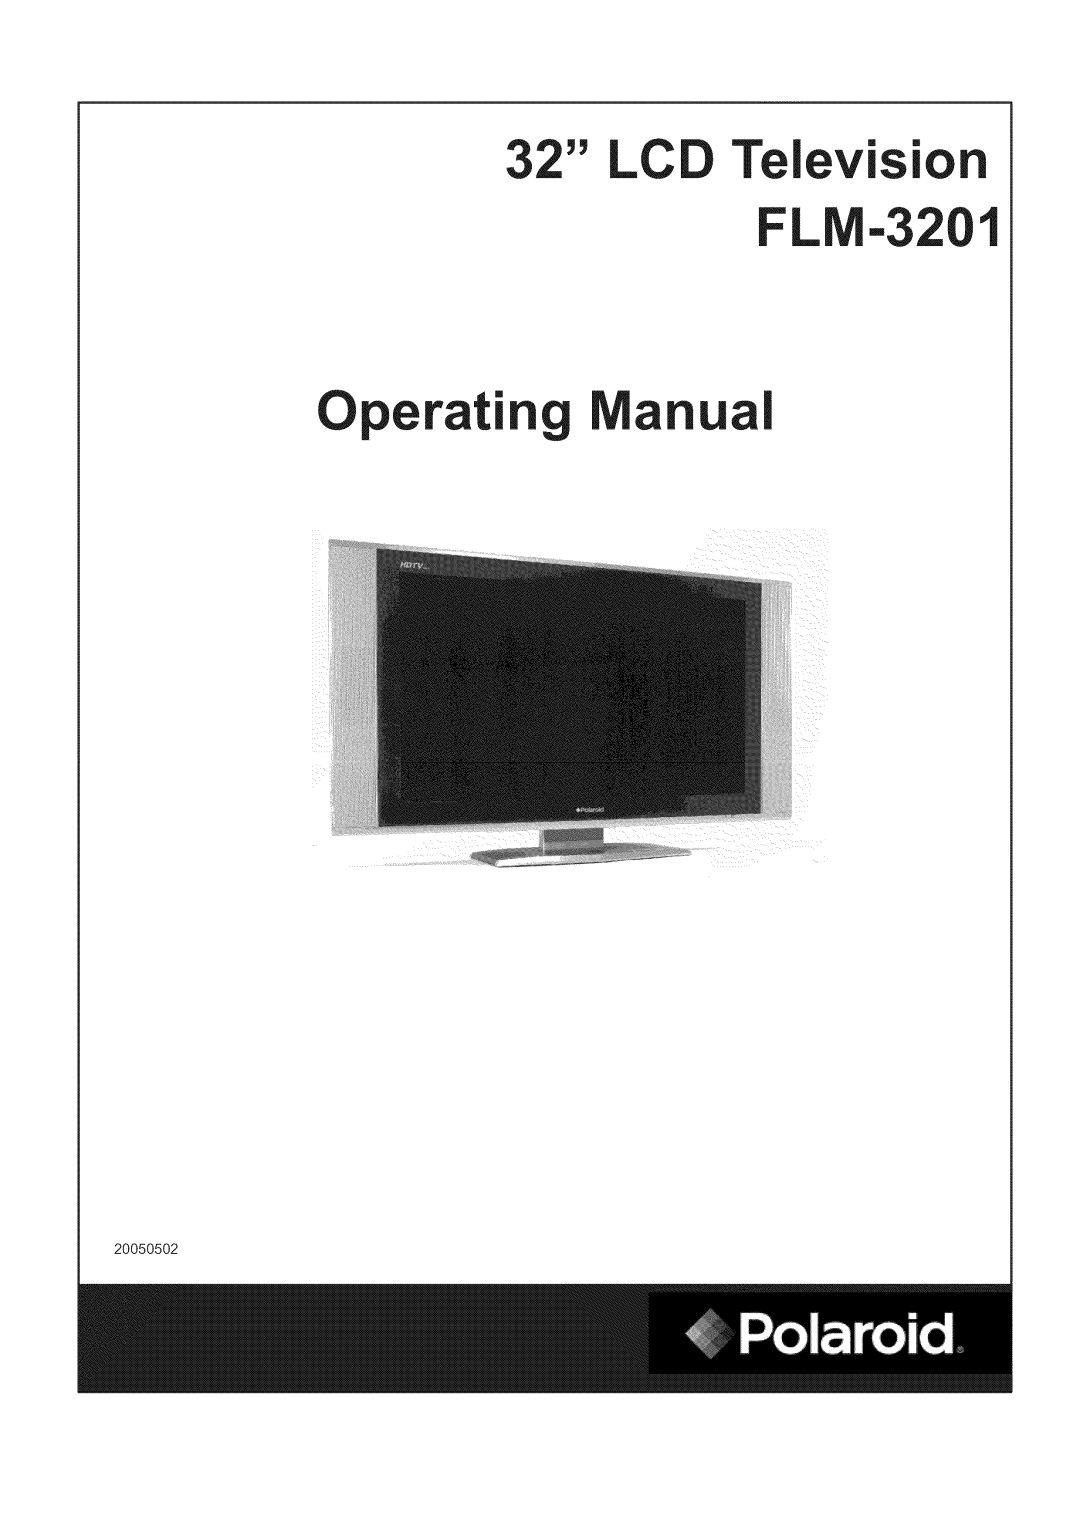 Polaroid FLM-3201 manual LCD Television, FLNI-3201, Operating IVlanual, 20050502 